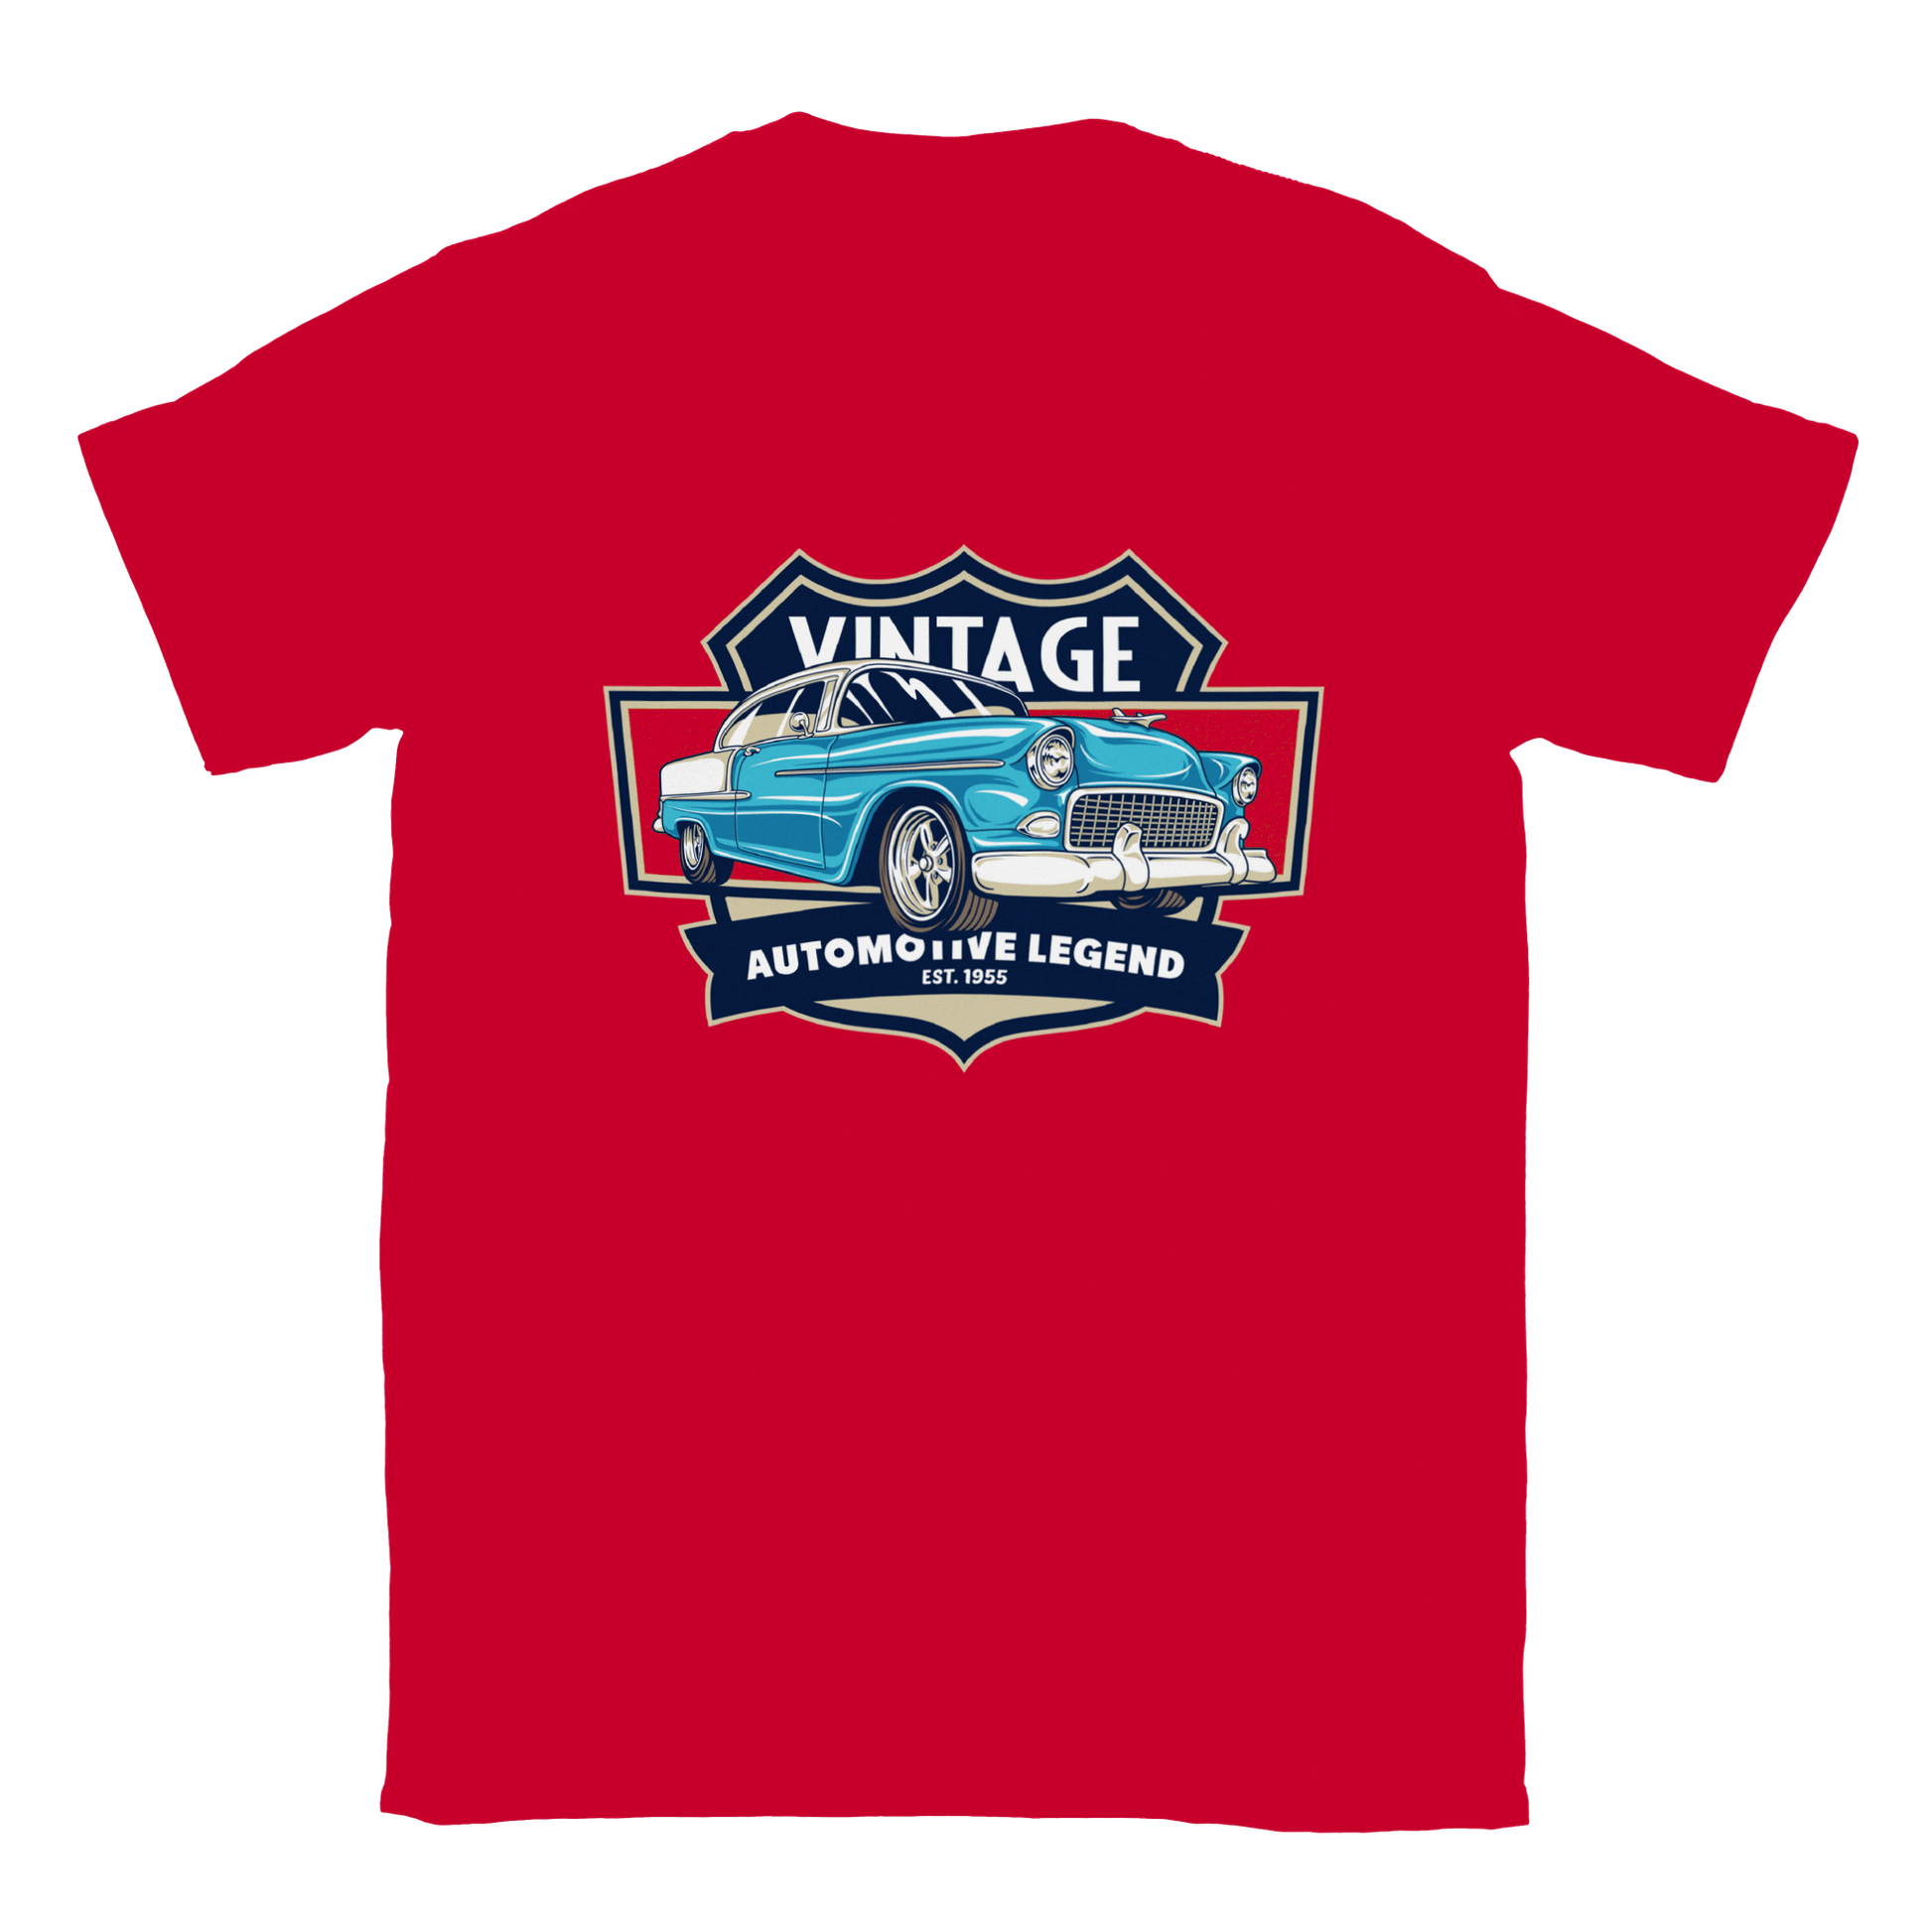 1955 Chevy - Vintage Automotive Legend T-shirt - Mister Snarky's